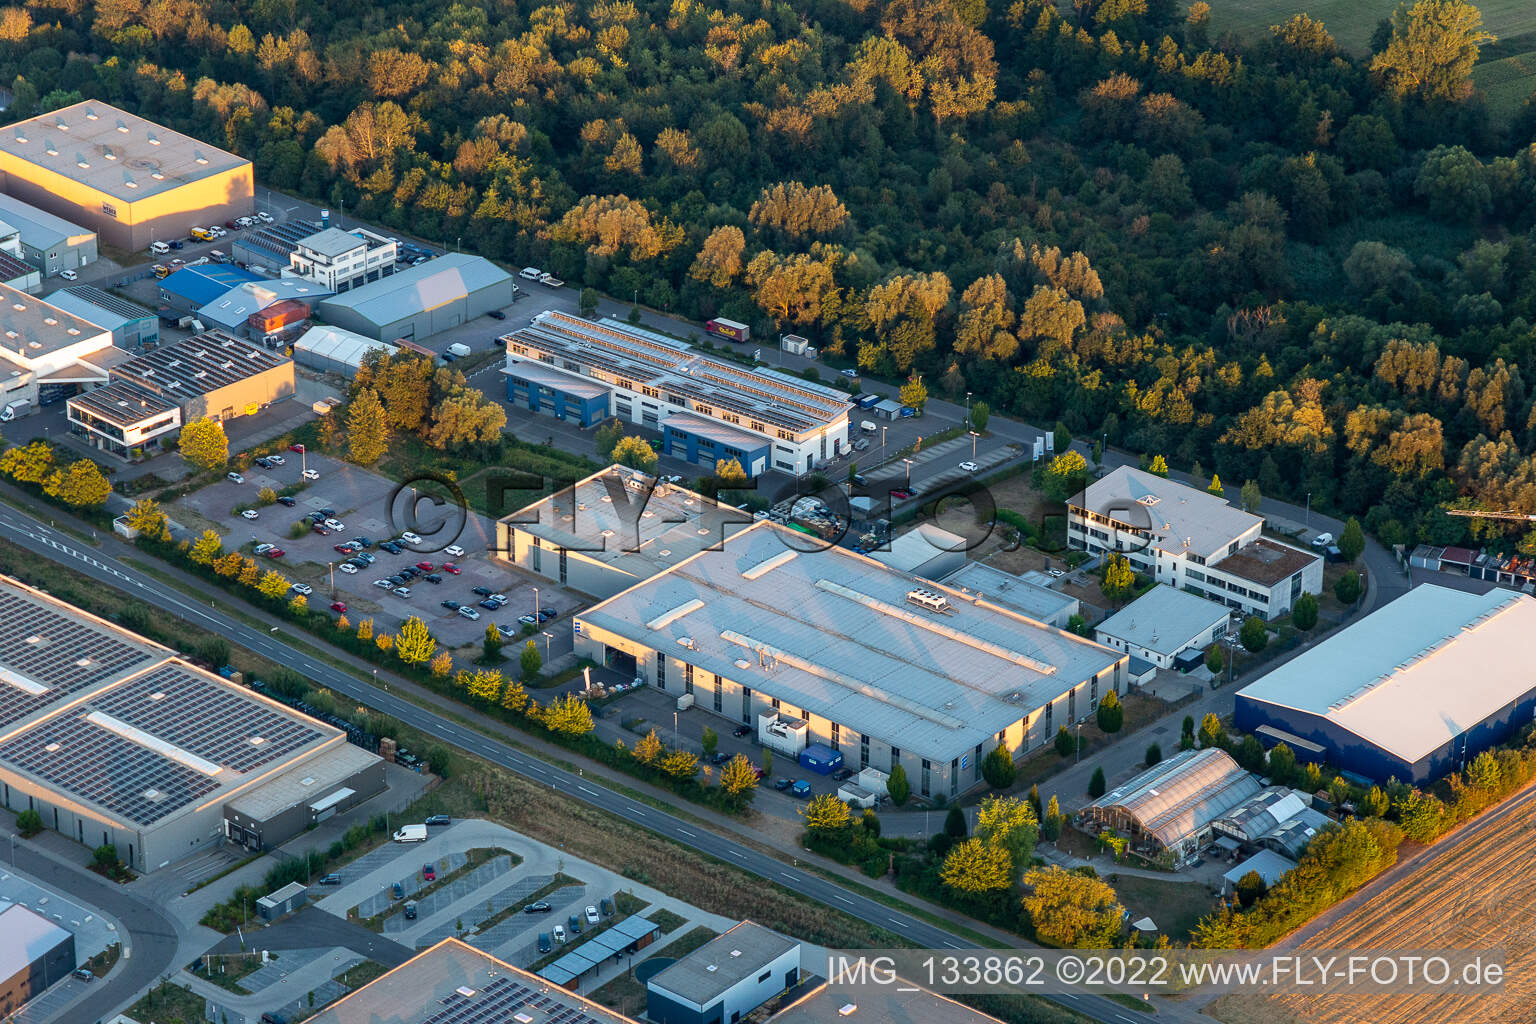 Aerial view of Eberspächer catem GmbH & Co. KG in the district Herxheim in Herxheim bei Landau/Pfalz in the state Rhineland-Palatinate, Germany